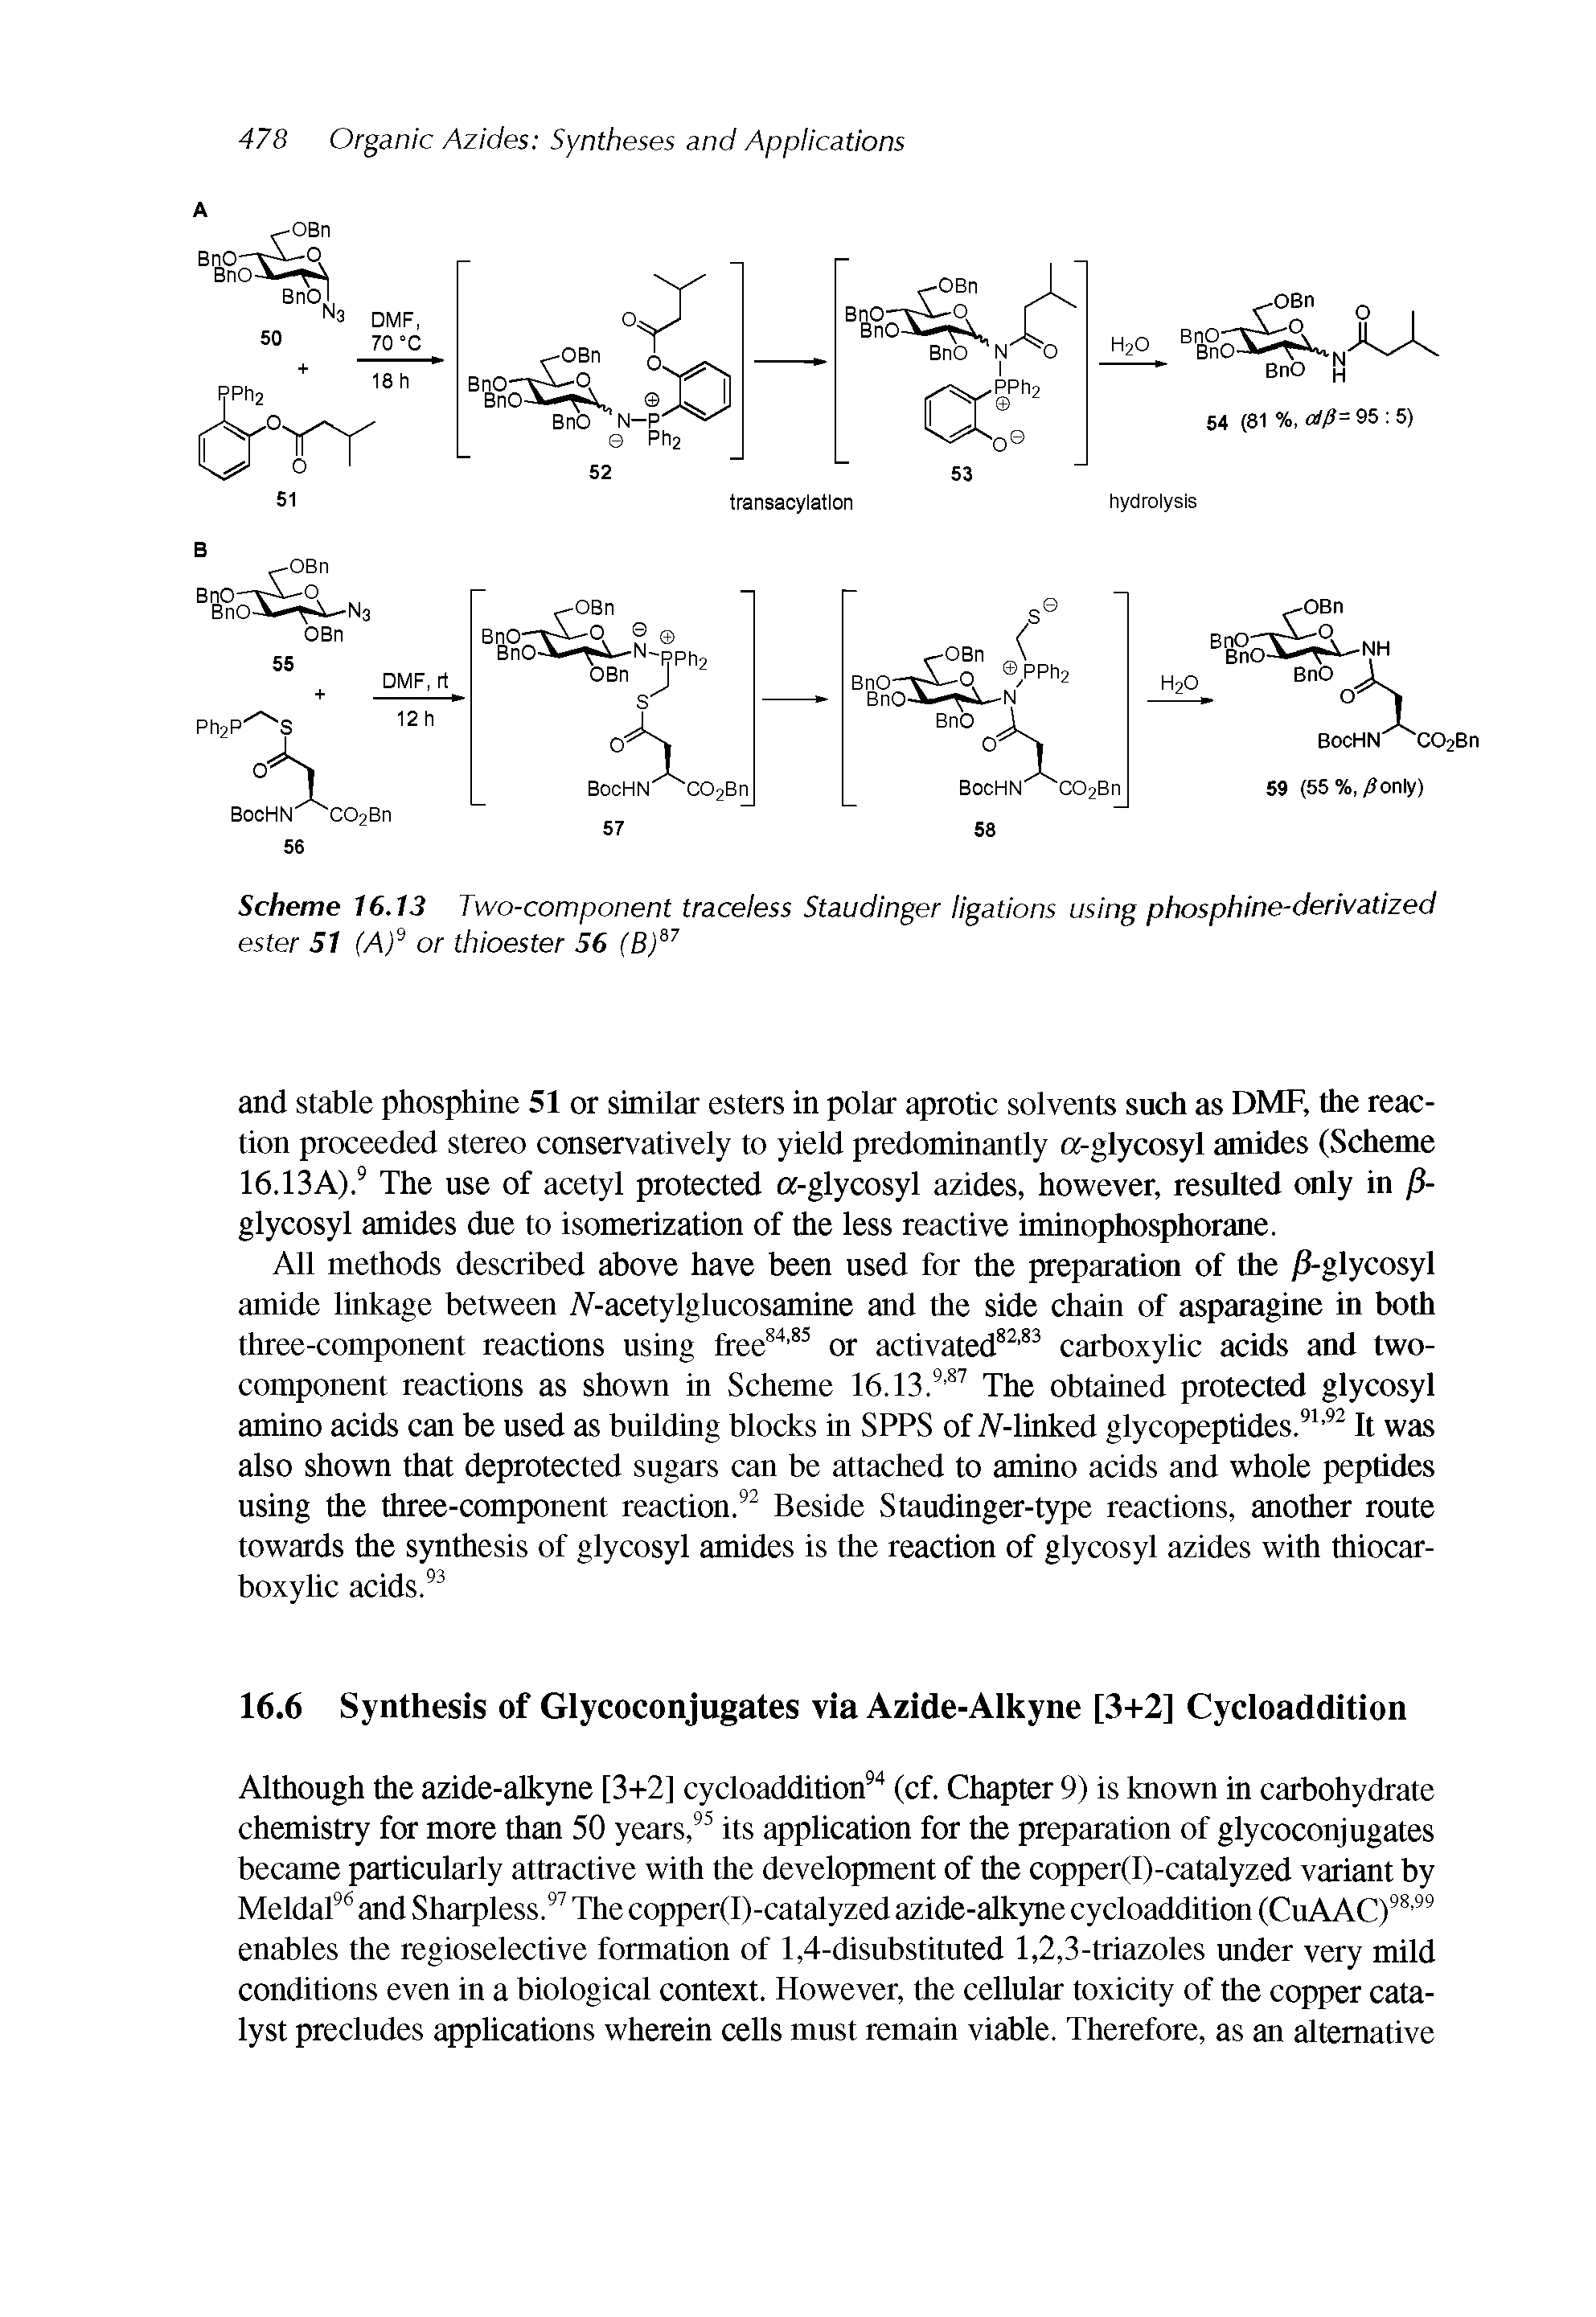 Scheme 16.13 Two-component traceless Staudinger ligations using phosphine-derivatized ester 51 (Af or thioester 56 (B) ...